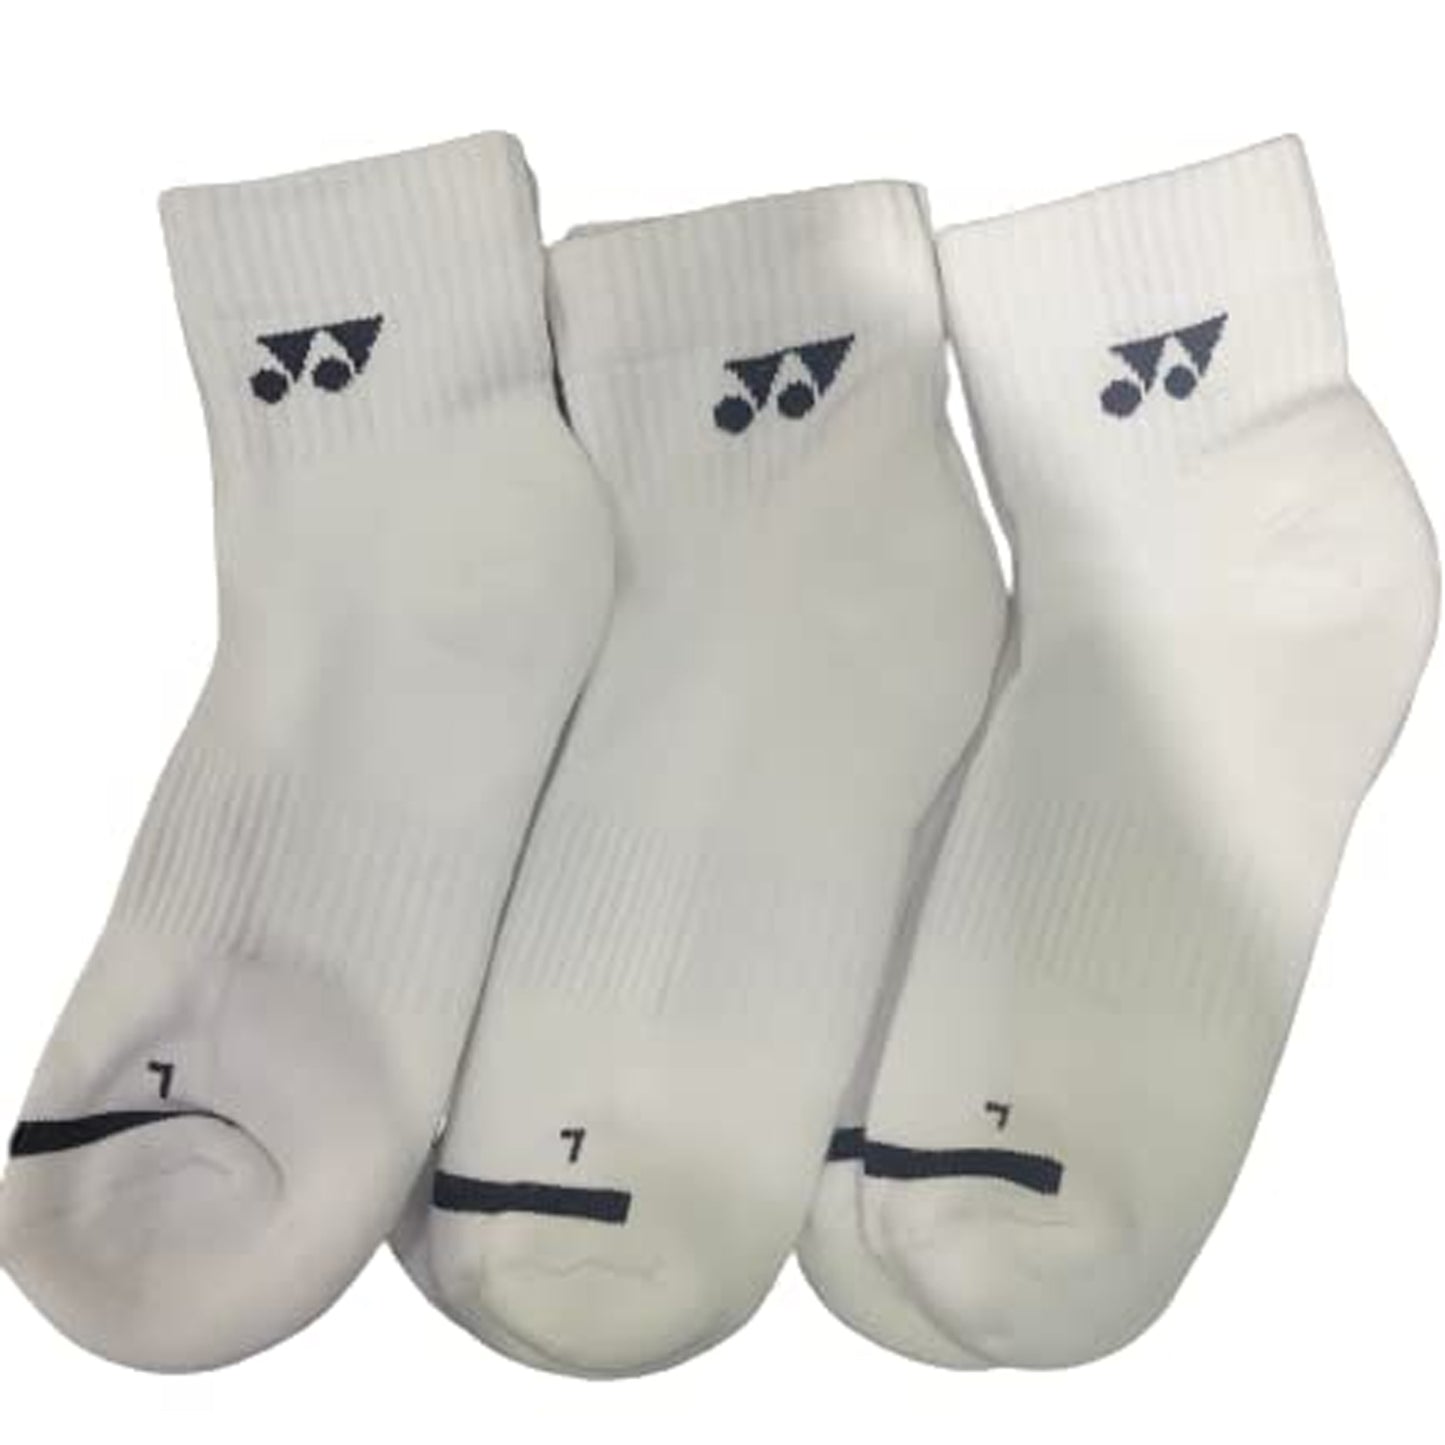 Yonex SKS SIS 2160A Ankle Socks, 3 Pair - All White - Best Price online Prokicksports.com